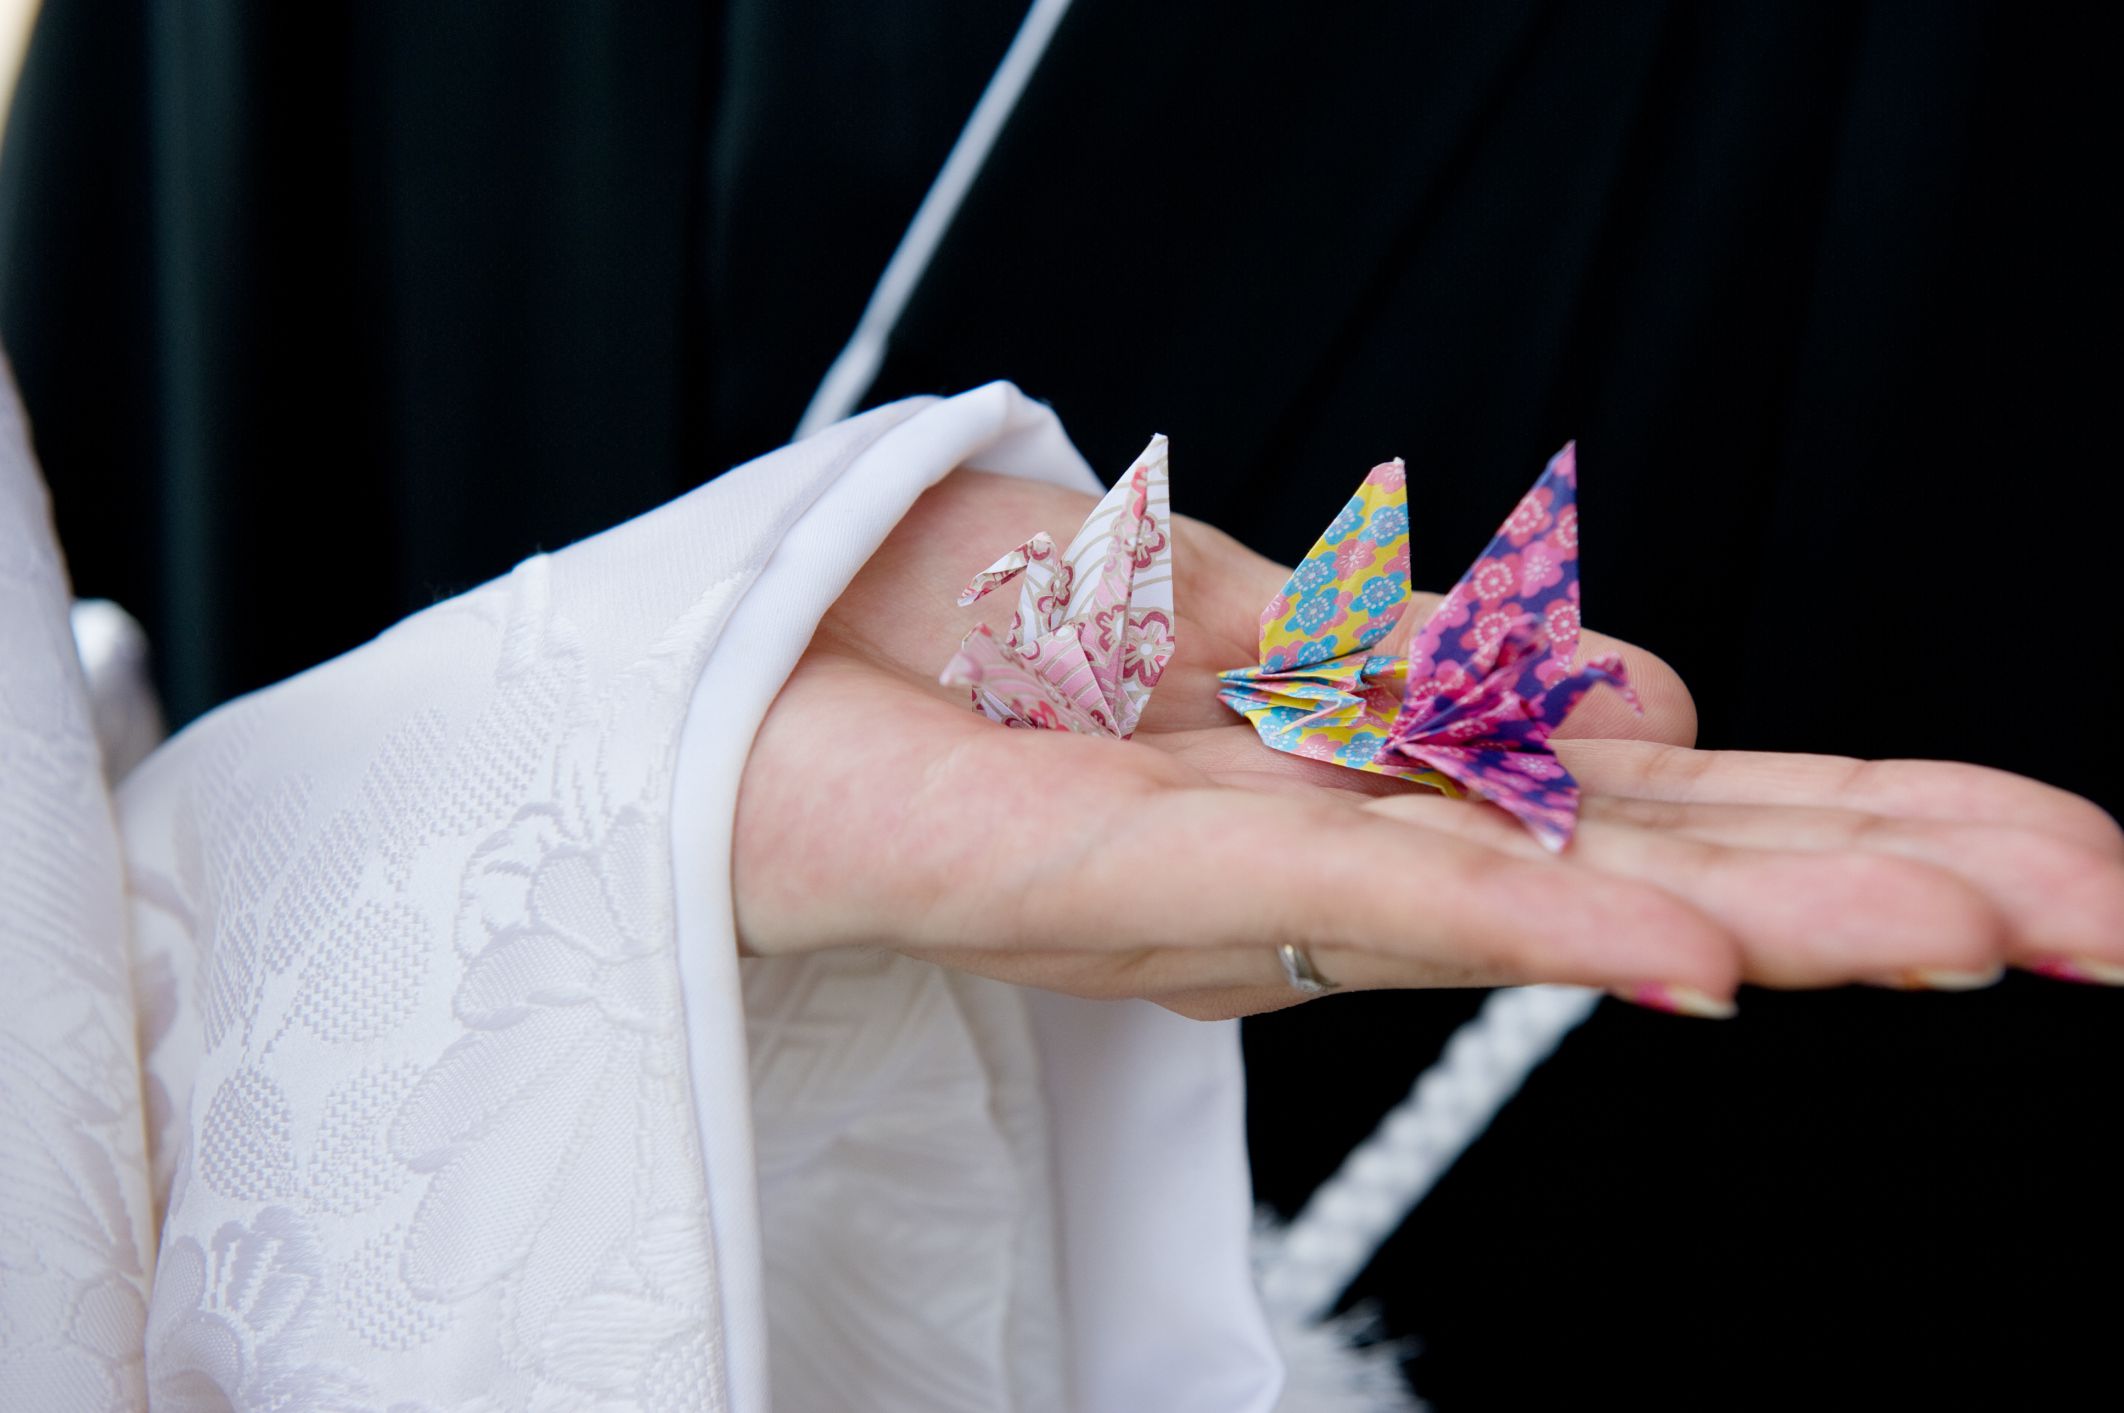 Japanese Unity Ceremony of Folding 1,000 Wedding Paper Cranes